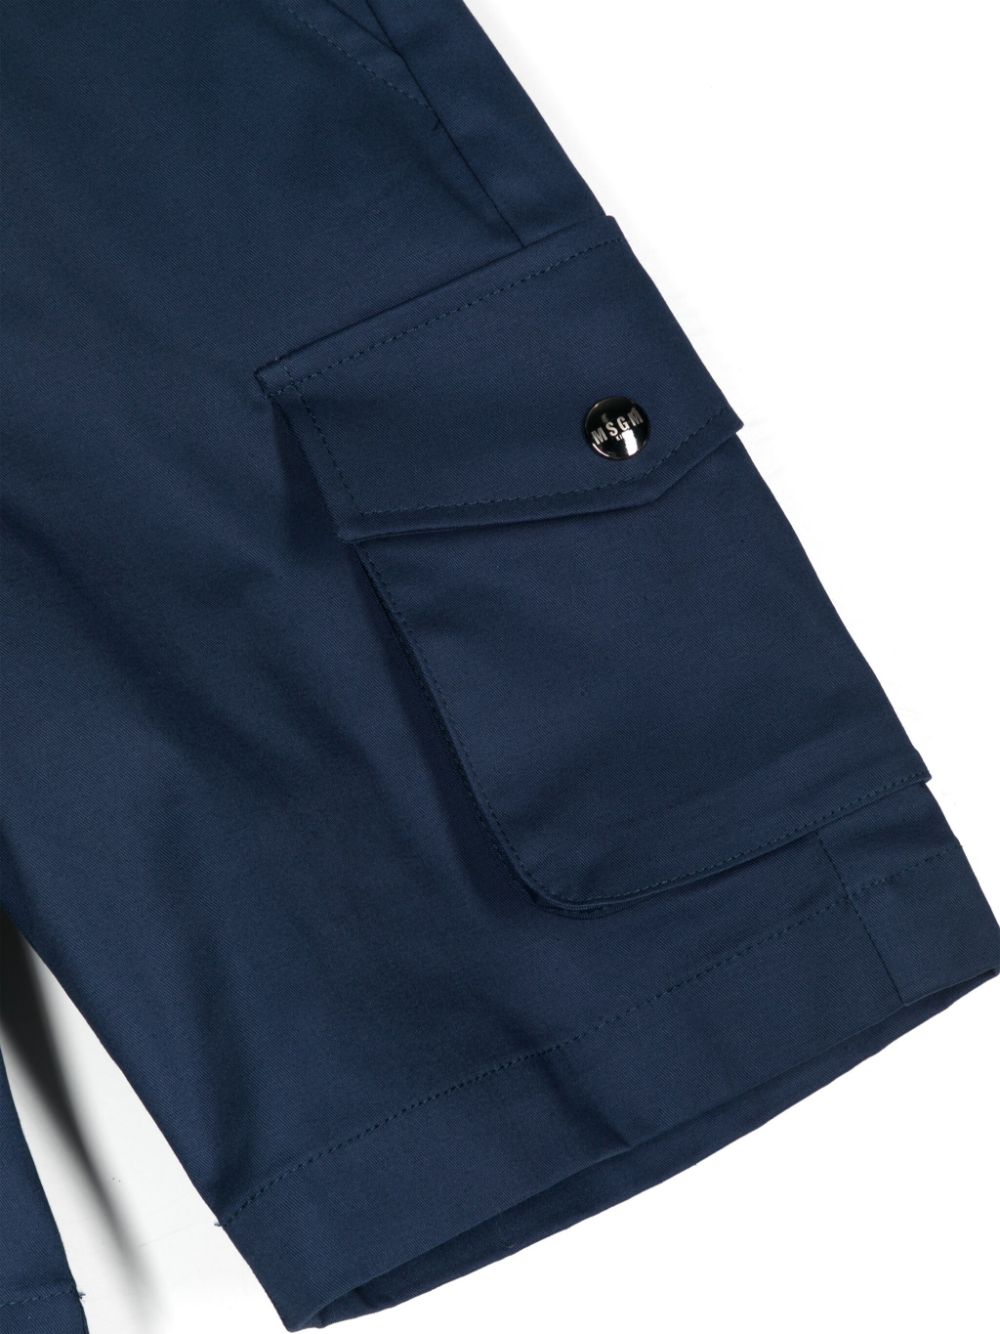 cargo-pocket bermuda shorts